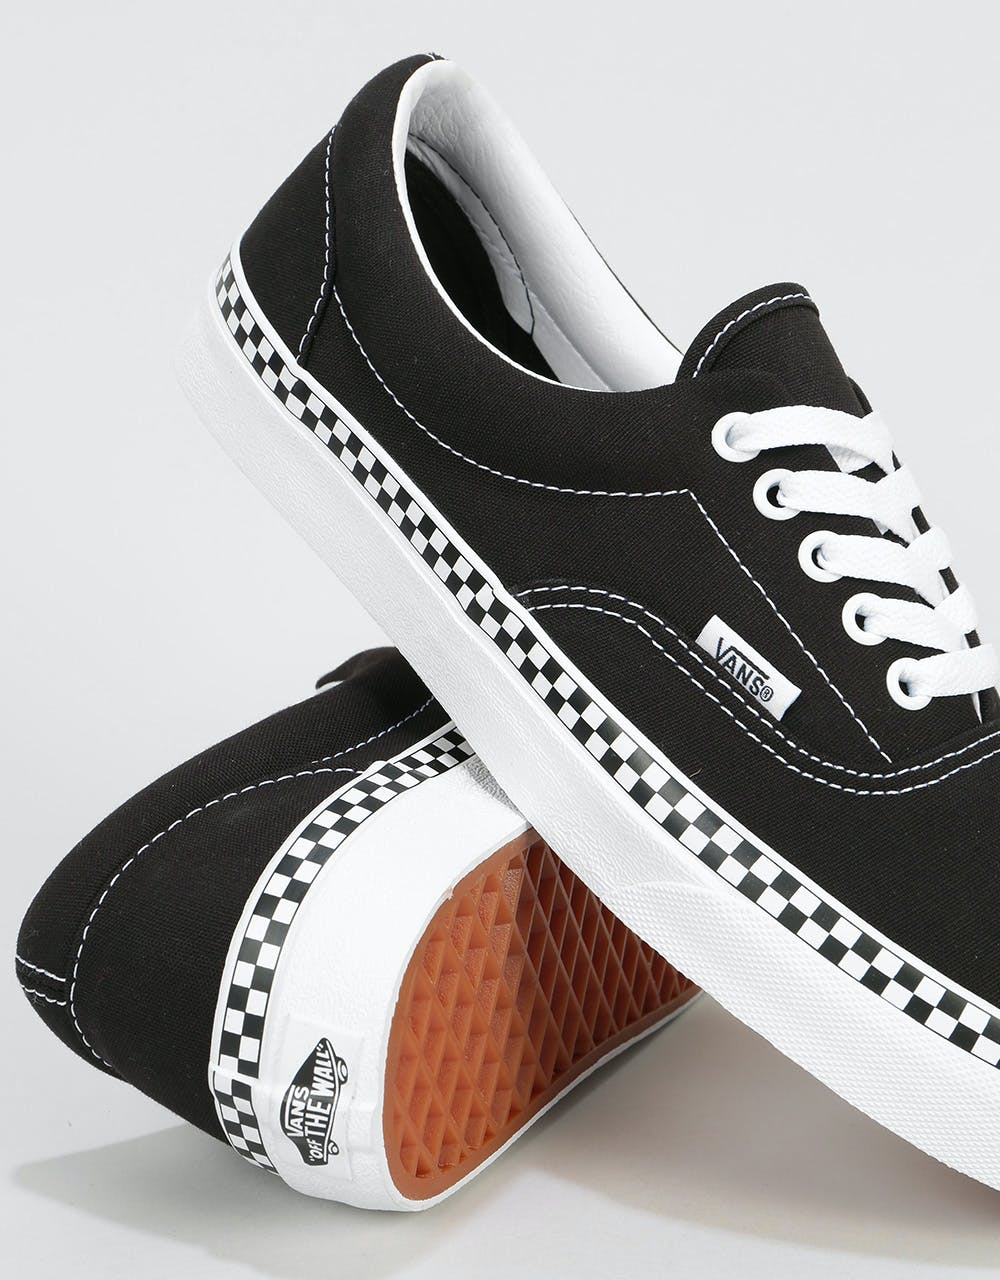 Vans Era Skate Shoes - (Check Foxing) Black